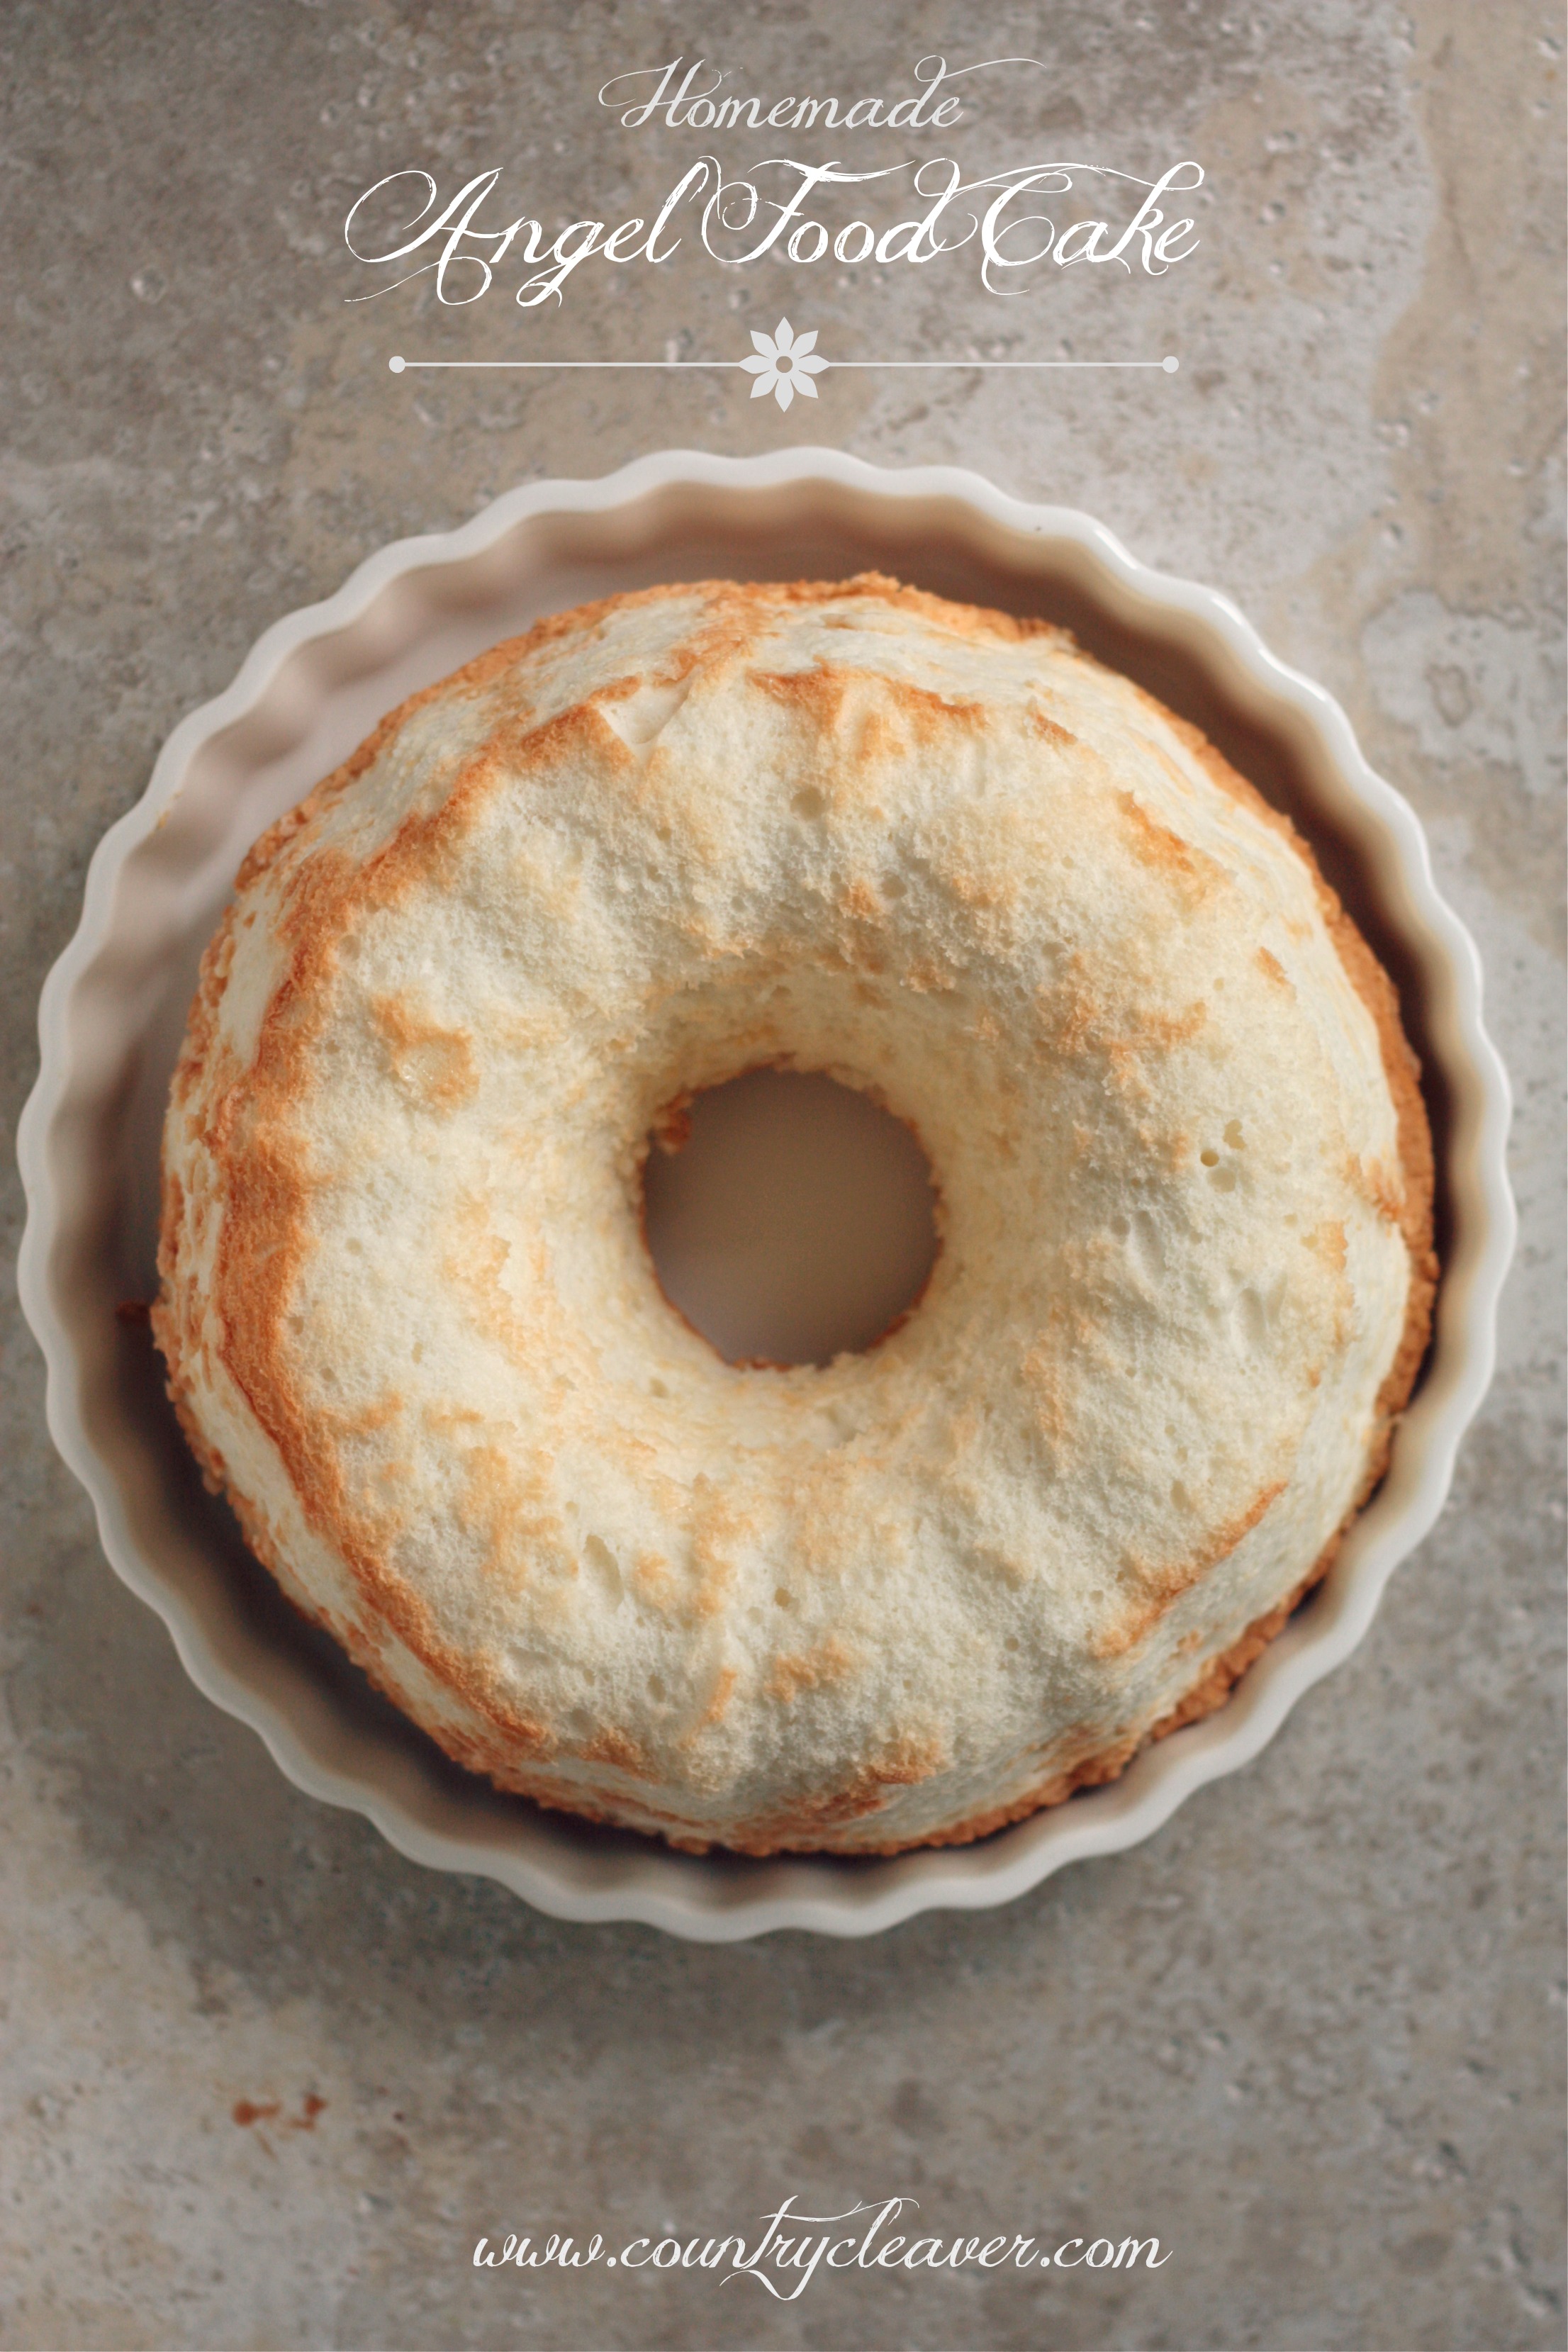 Homemade Angel Food Cake - www.countrycleaver.com